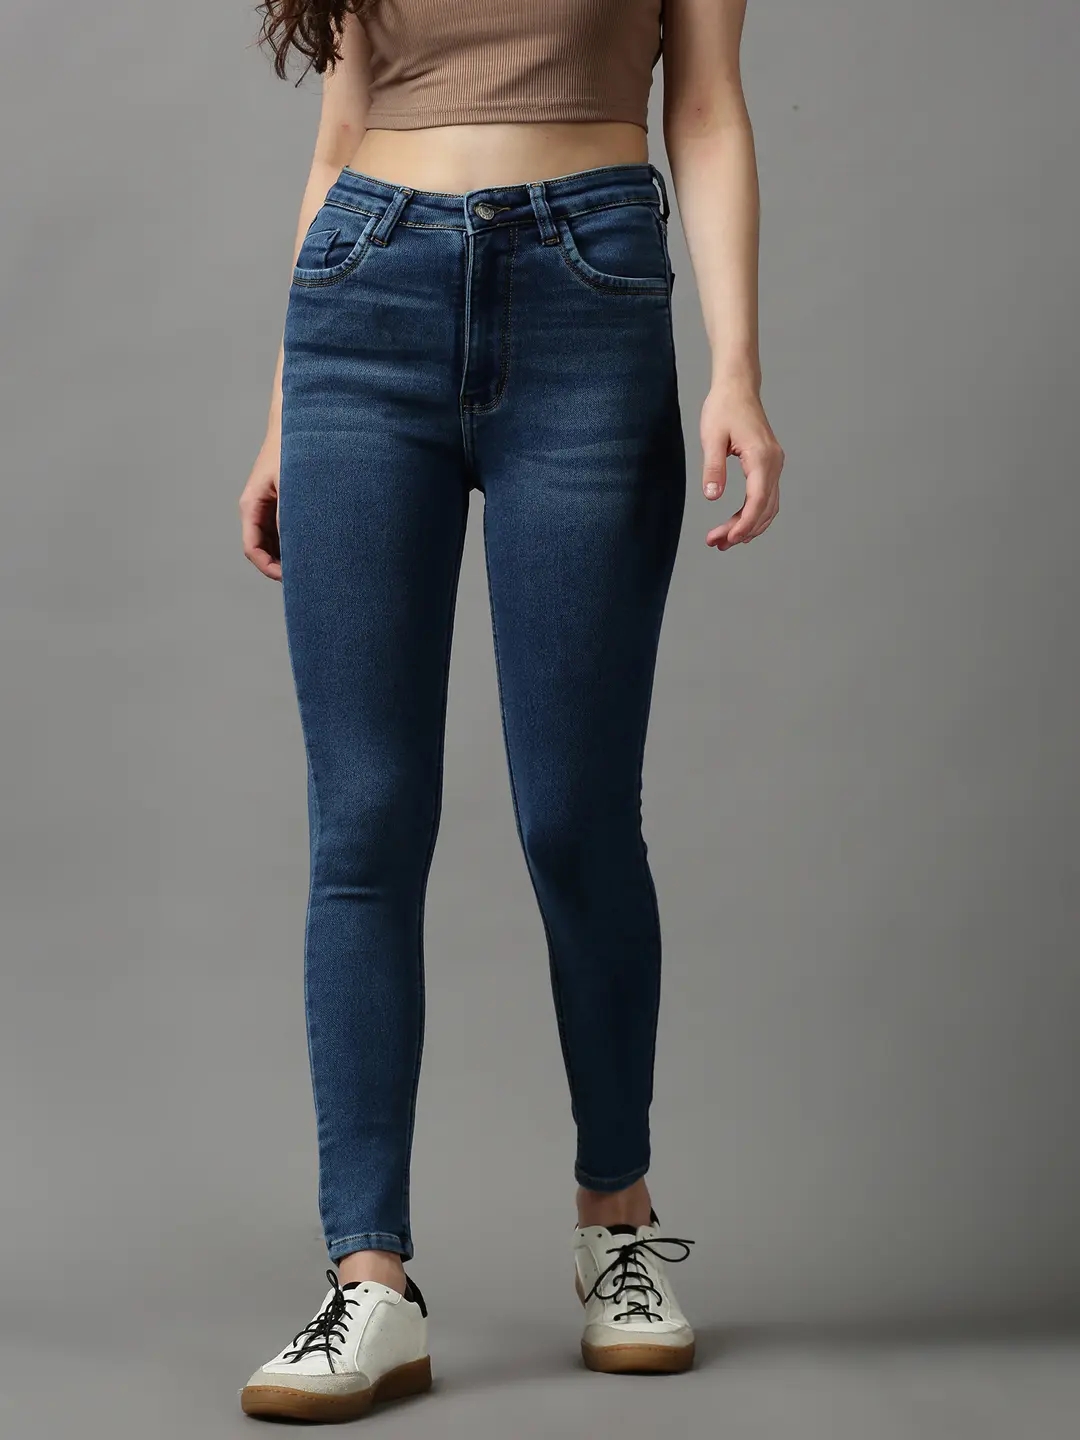 Women's Blue Denim Solid Jeans